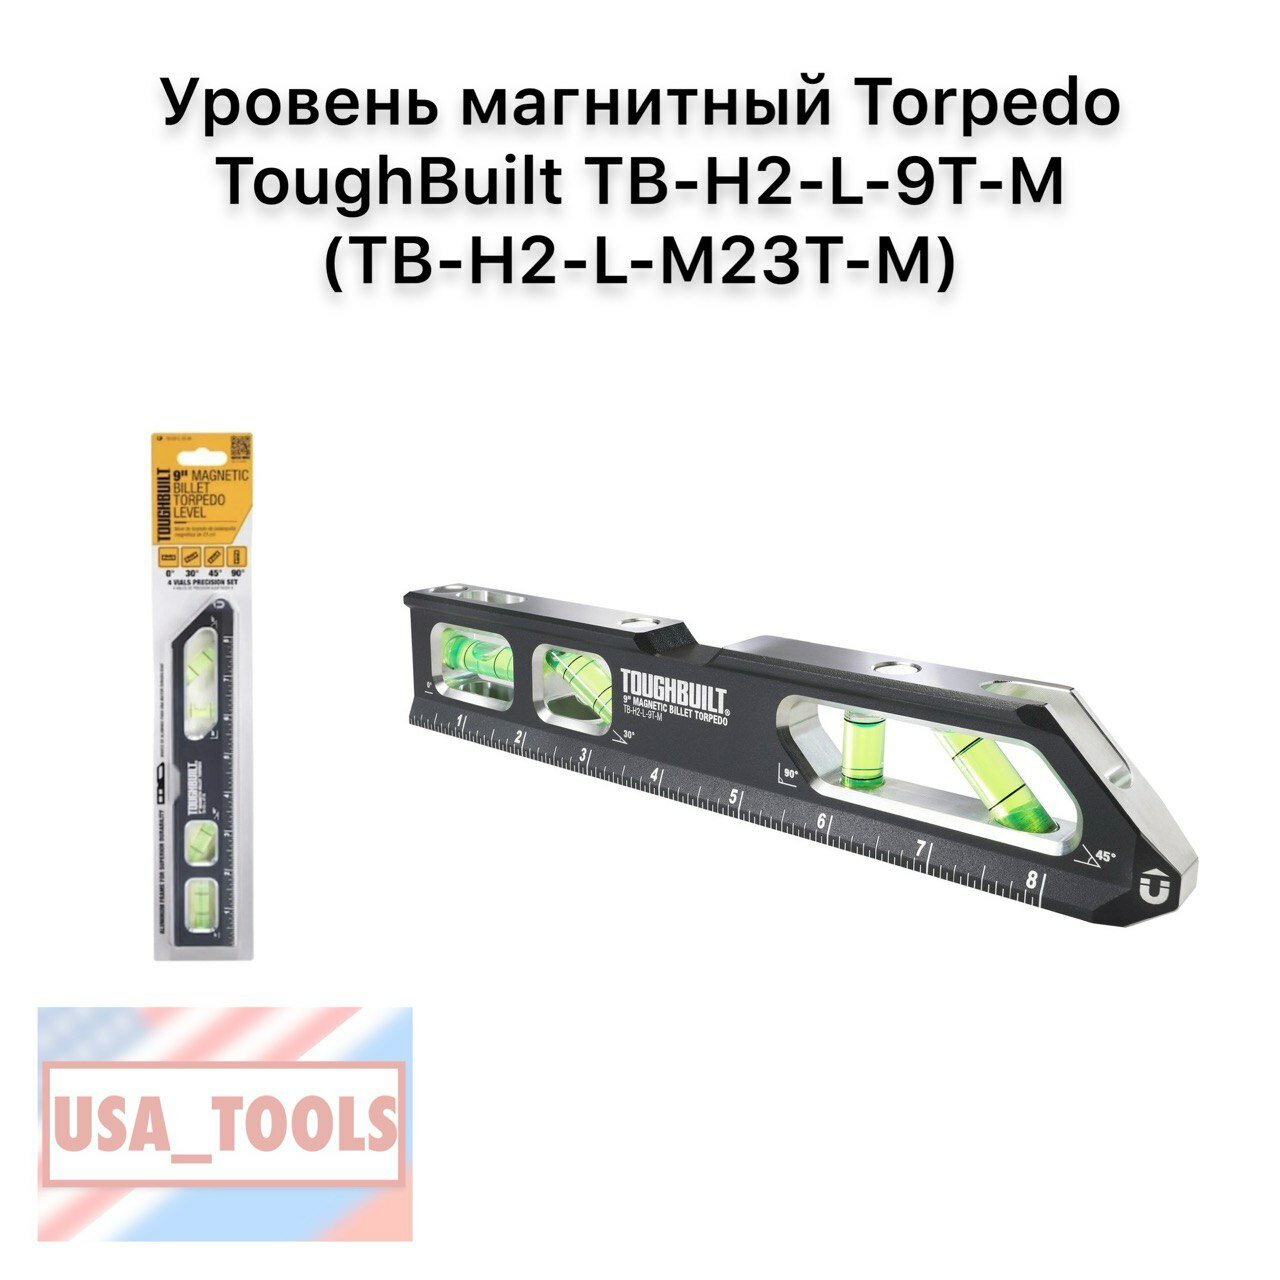 Уровень магнитный Torpedo ToughBuilt TB-H2-L-9T-M (TB-H2-L-M23T-M)